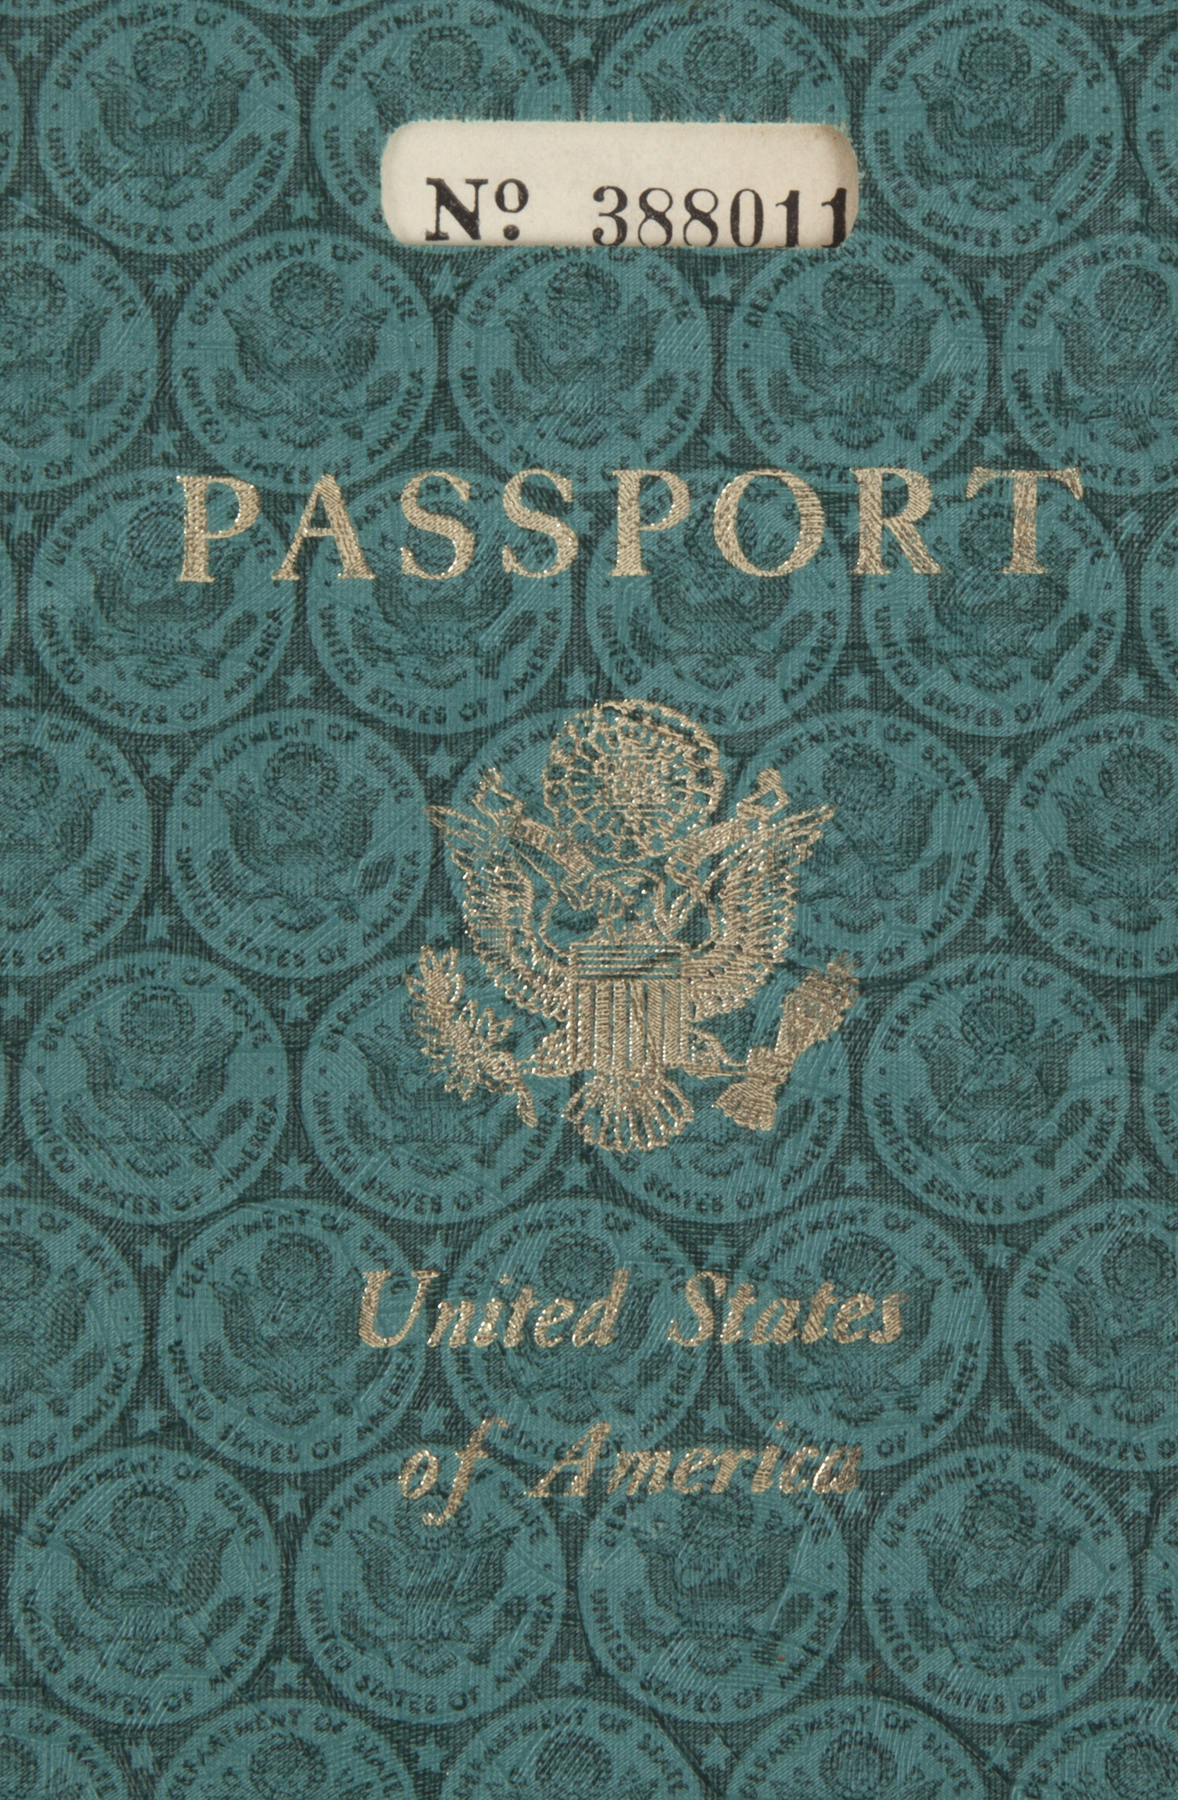 JACKIE GLEASON PASSPORT - Image 3 of 3